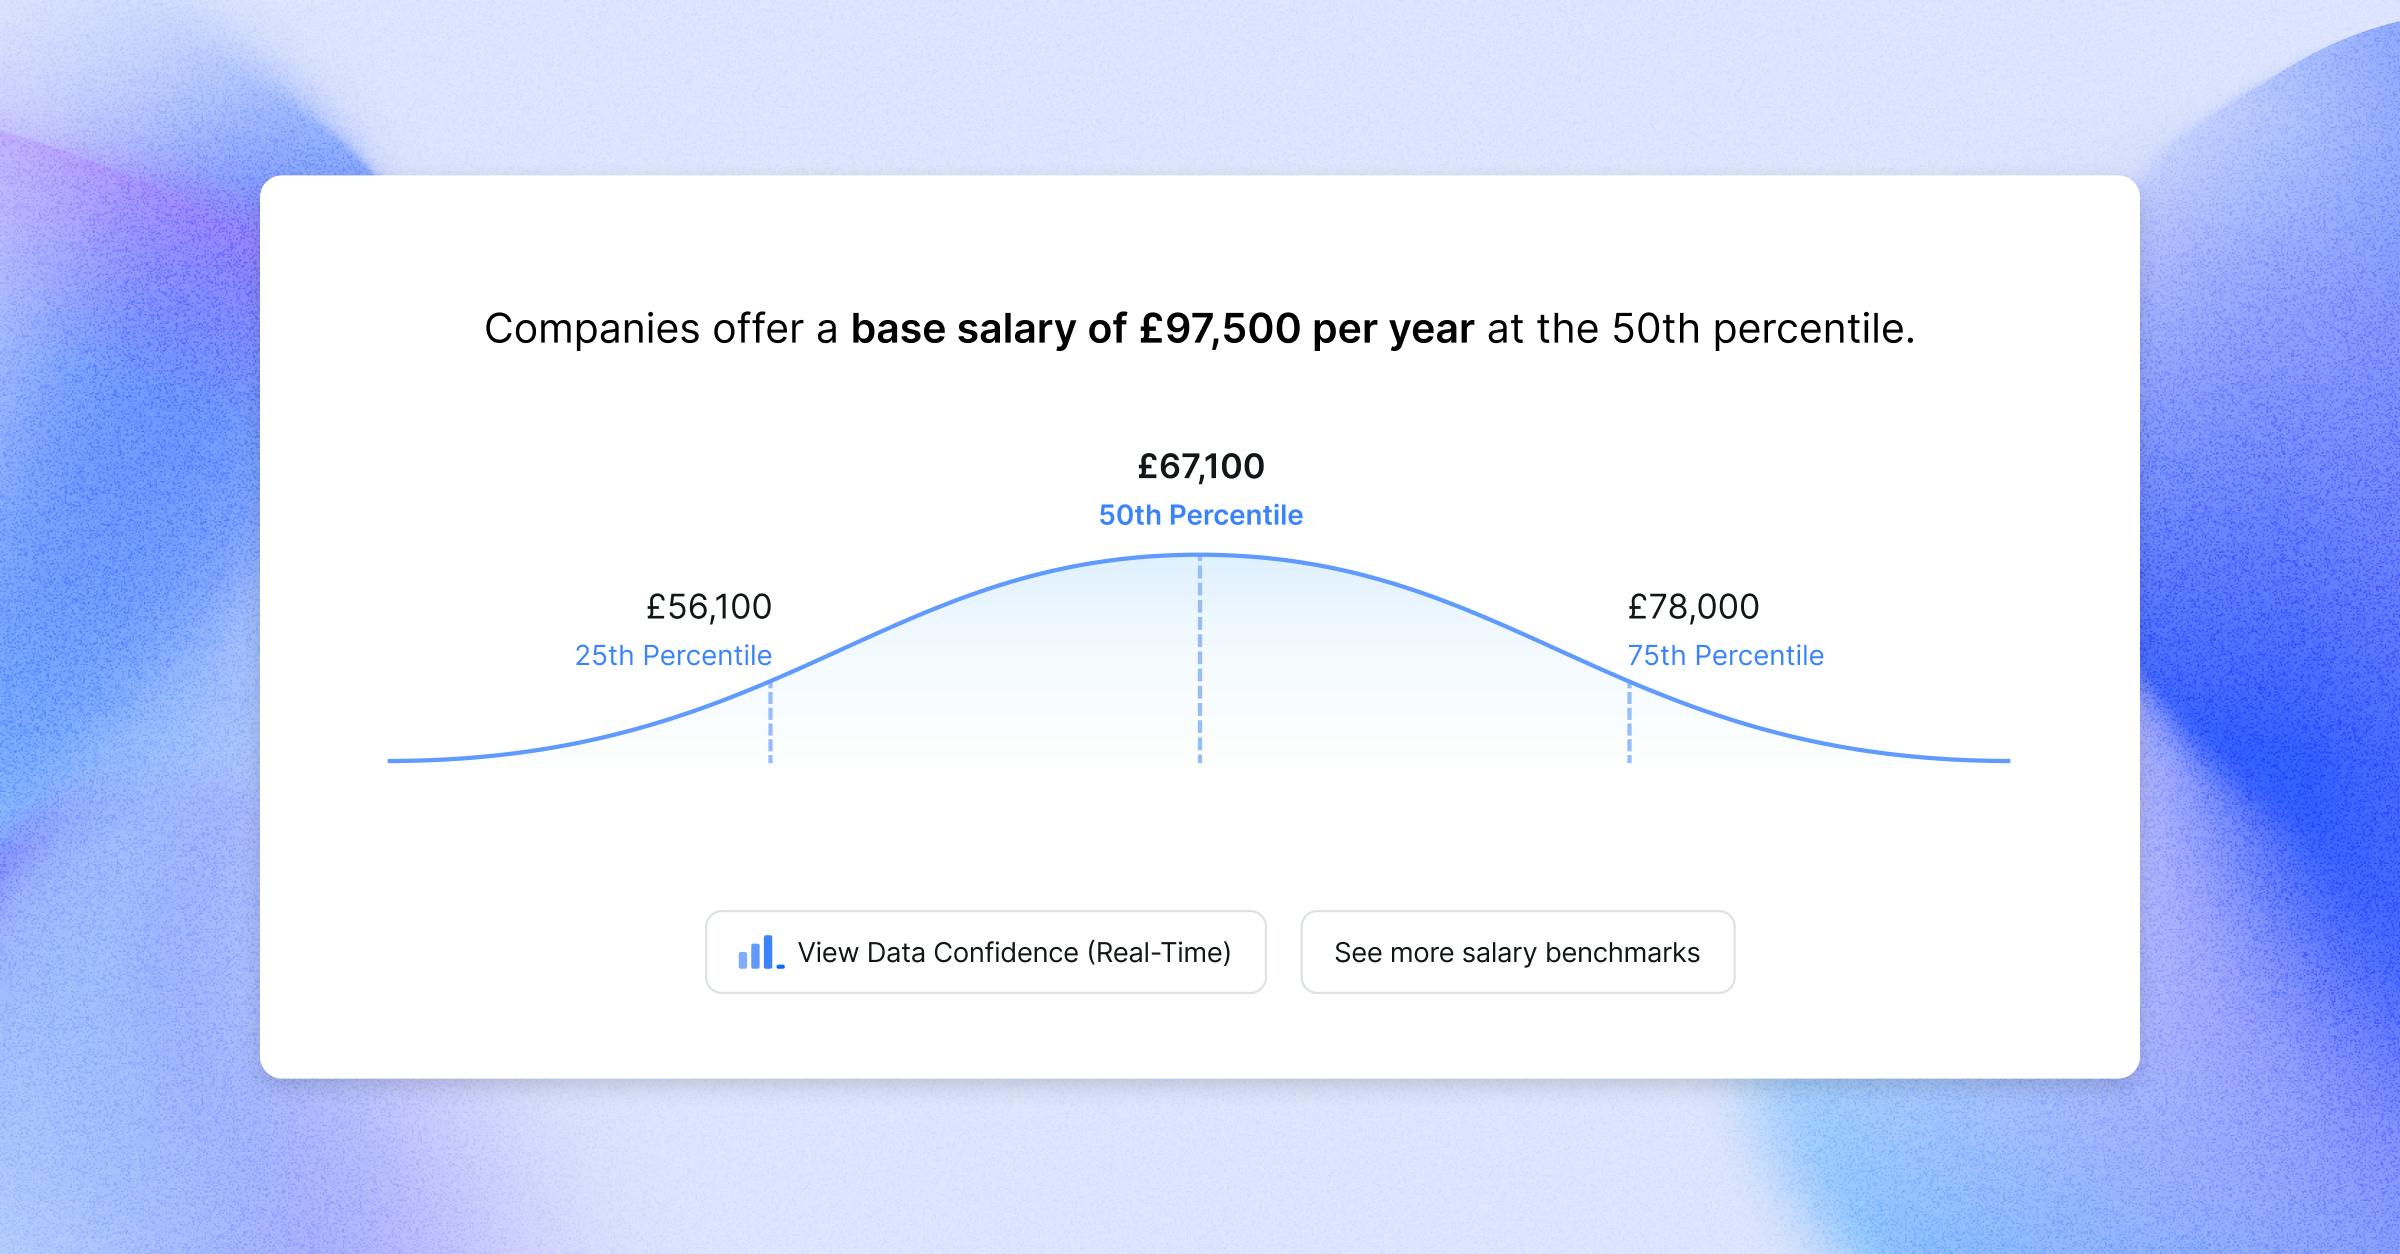 Ravio product screenshot showing base salary benchmarking across different target percentiles.